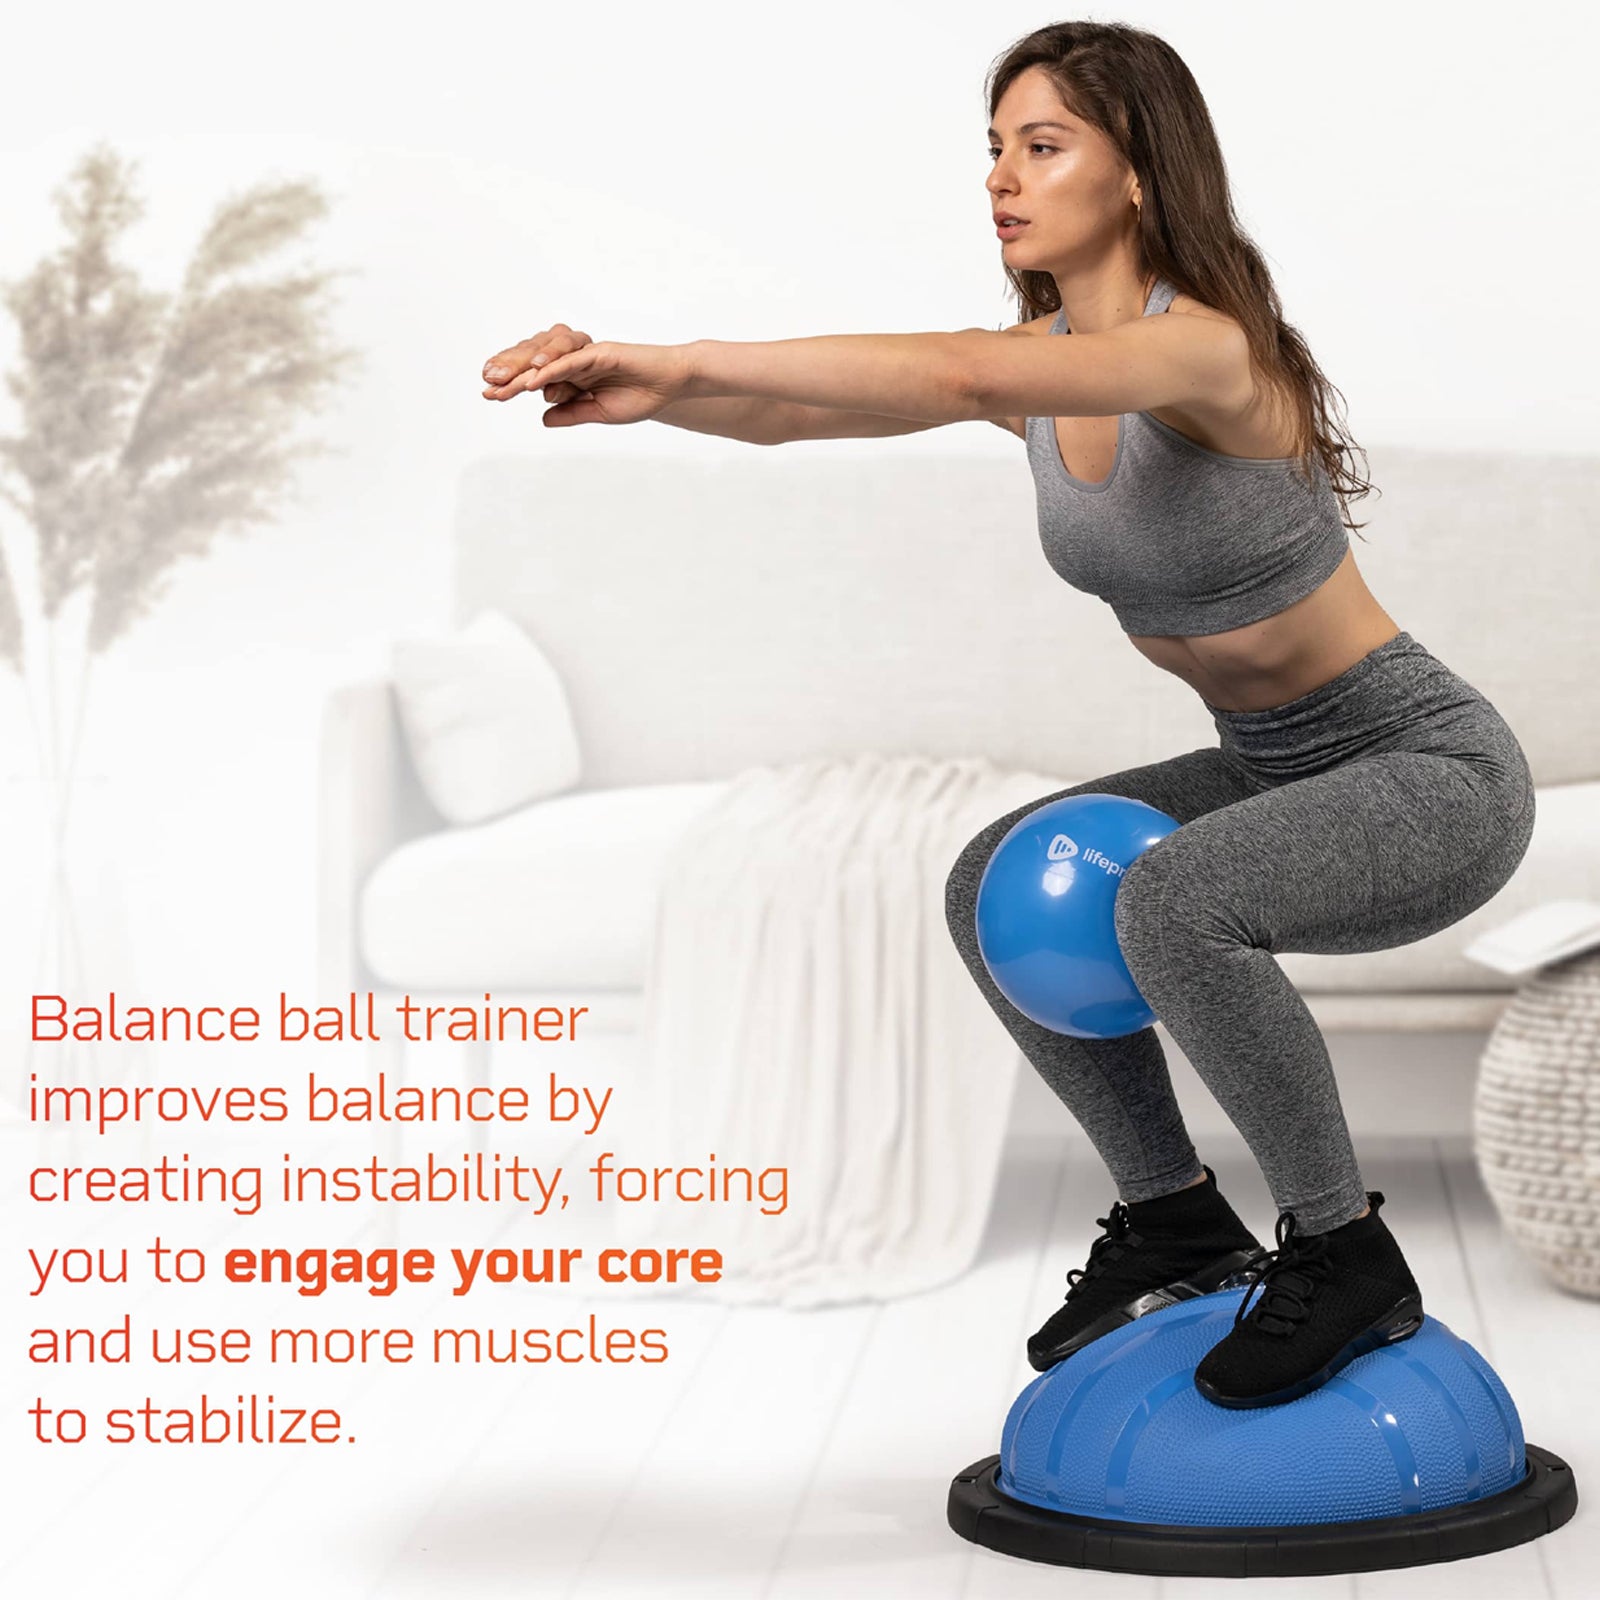 LifePro Horizon Textured Non-Slip Surface Balance Ball Trainer - Barbell Flex